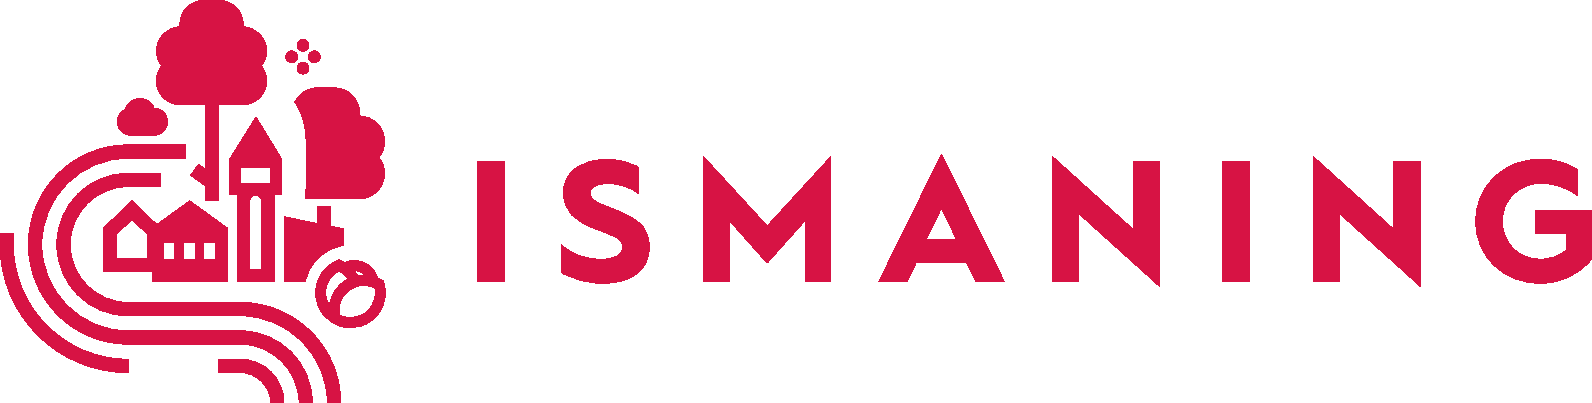 ismaning_logo